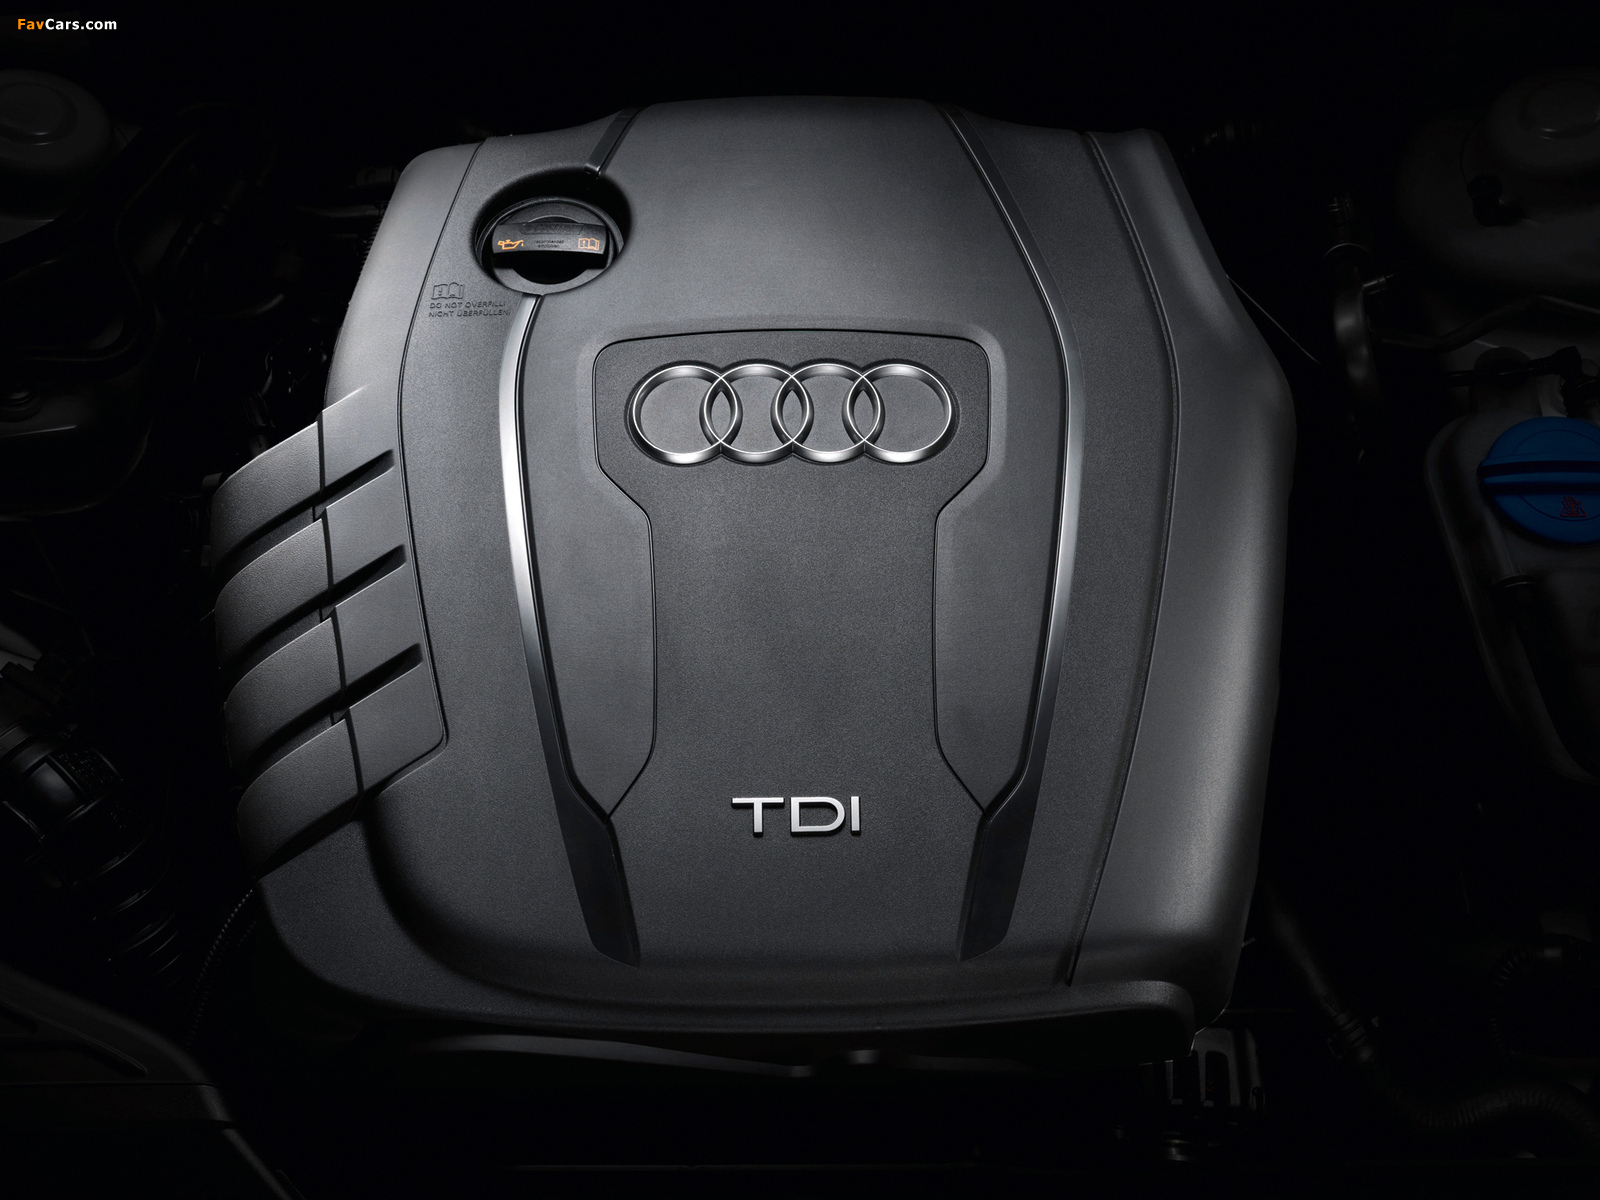 Audi A4 2.0 TDI quattro Avant (B8,8K) 2012 pictures (1600 x 1200)